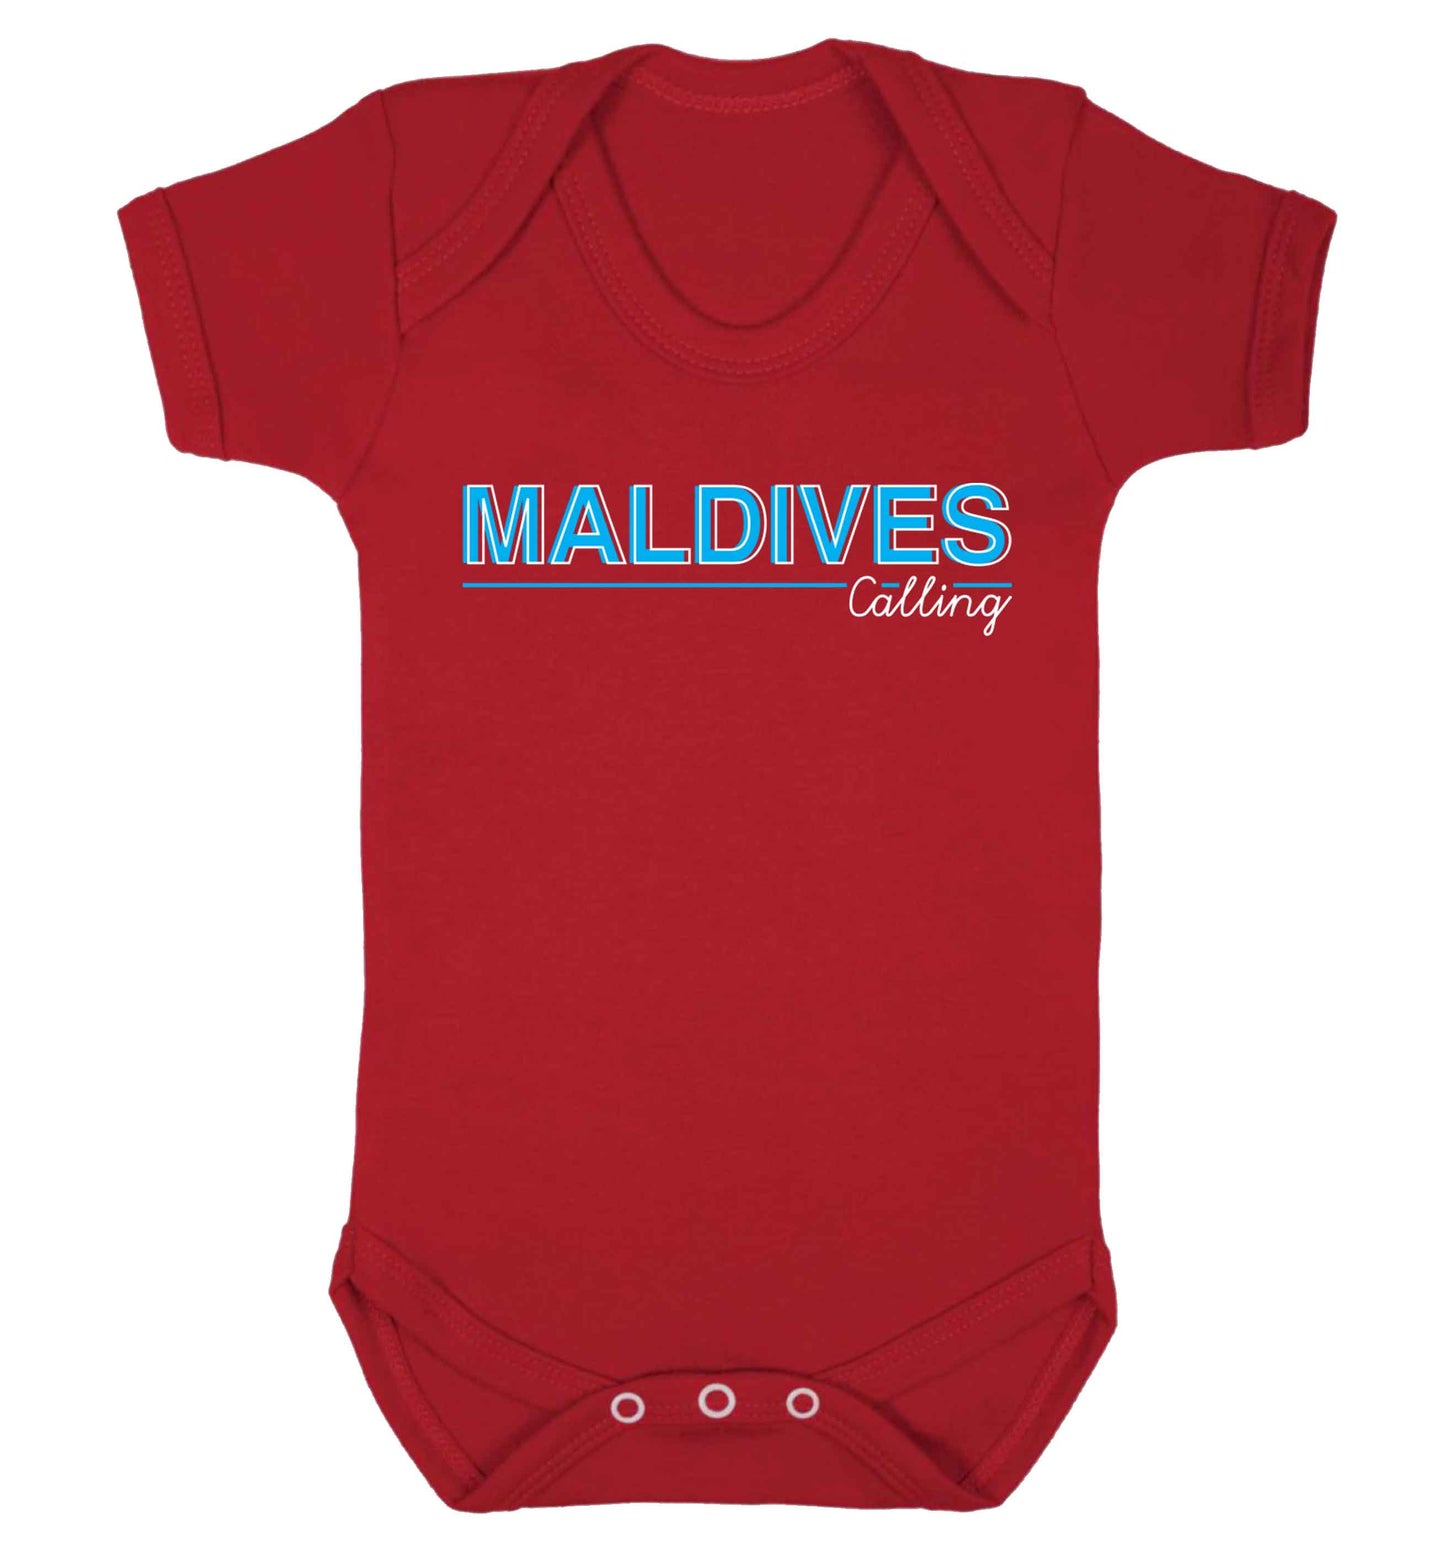 Maldives calling Baby Vest red 18-24 months